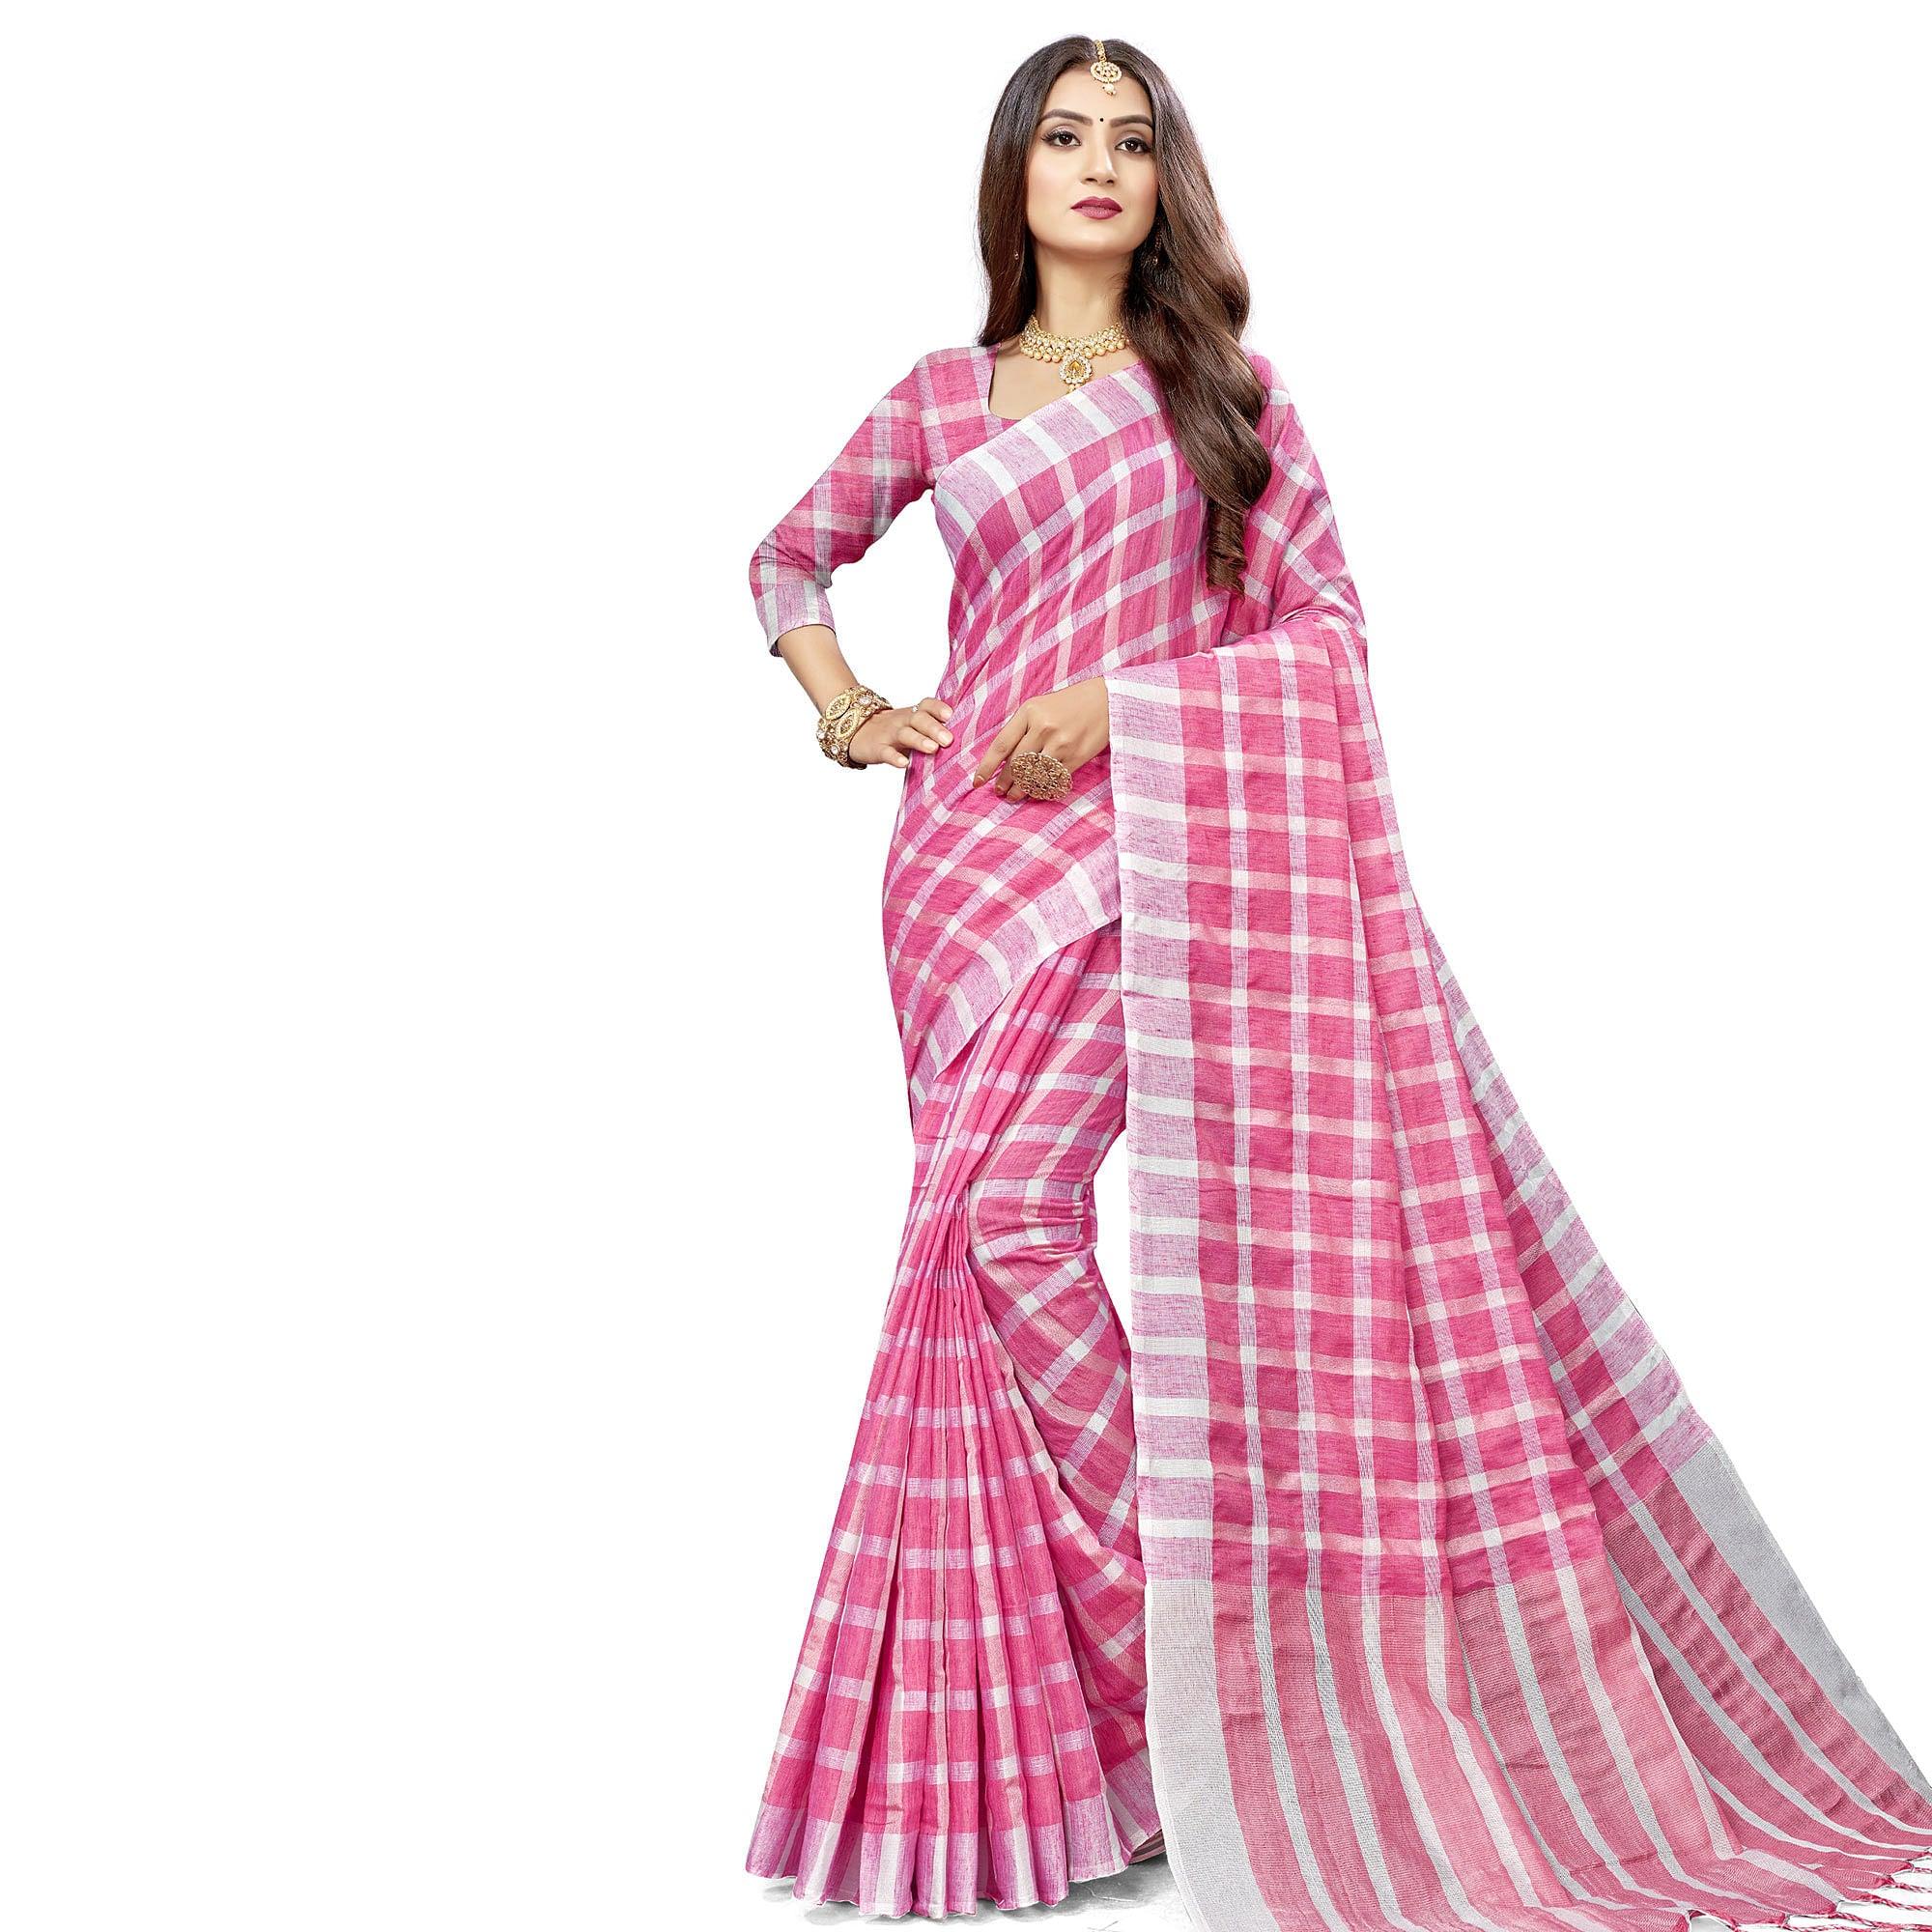 Flamboyant Pink Colored Fesive Wear Checks Print Cotton Silk Saree With Tassels - Peachmode